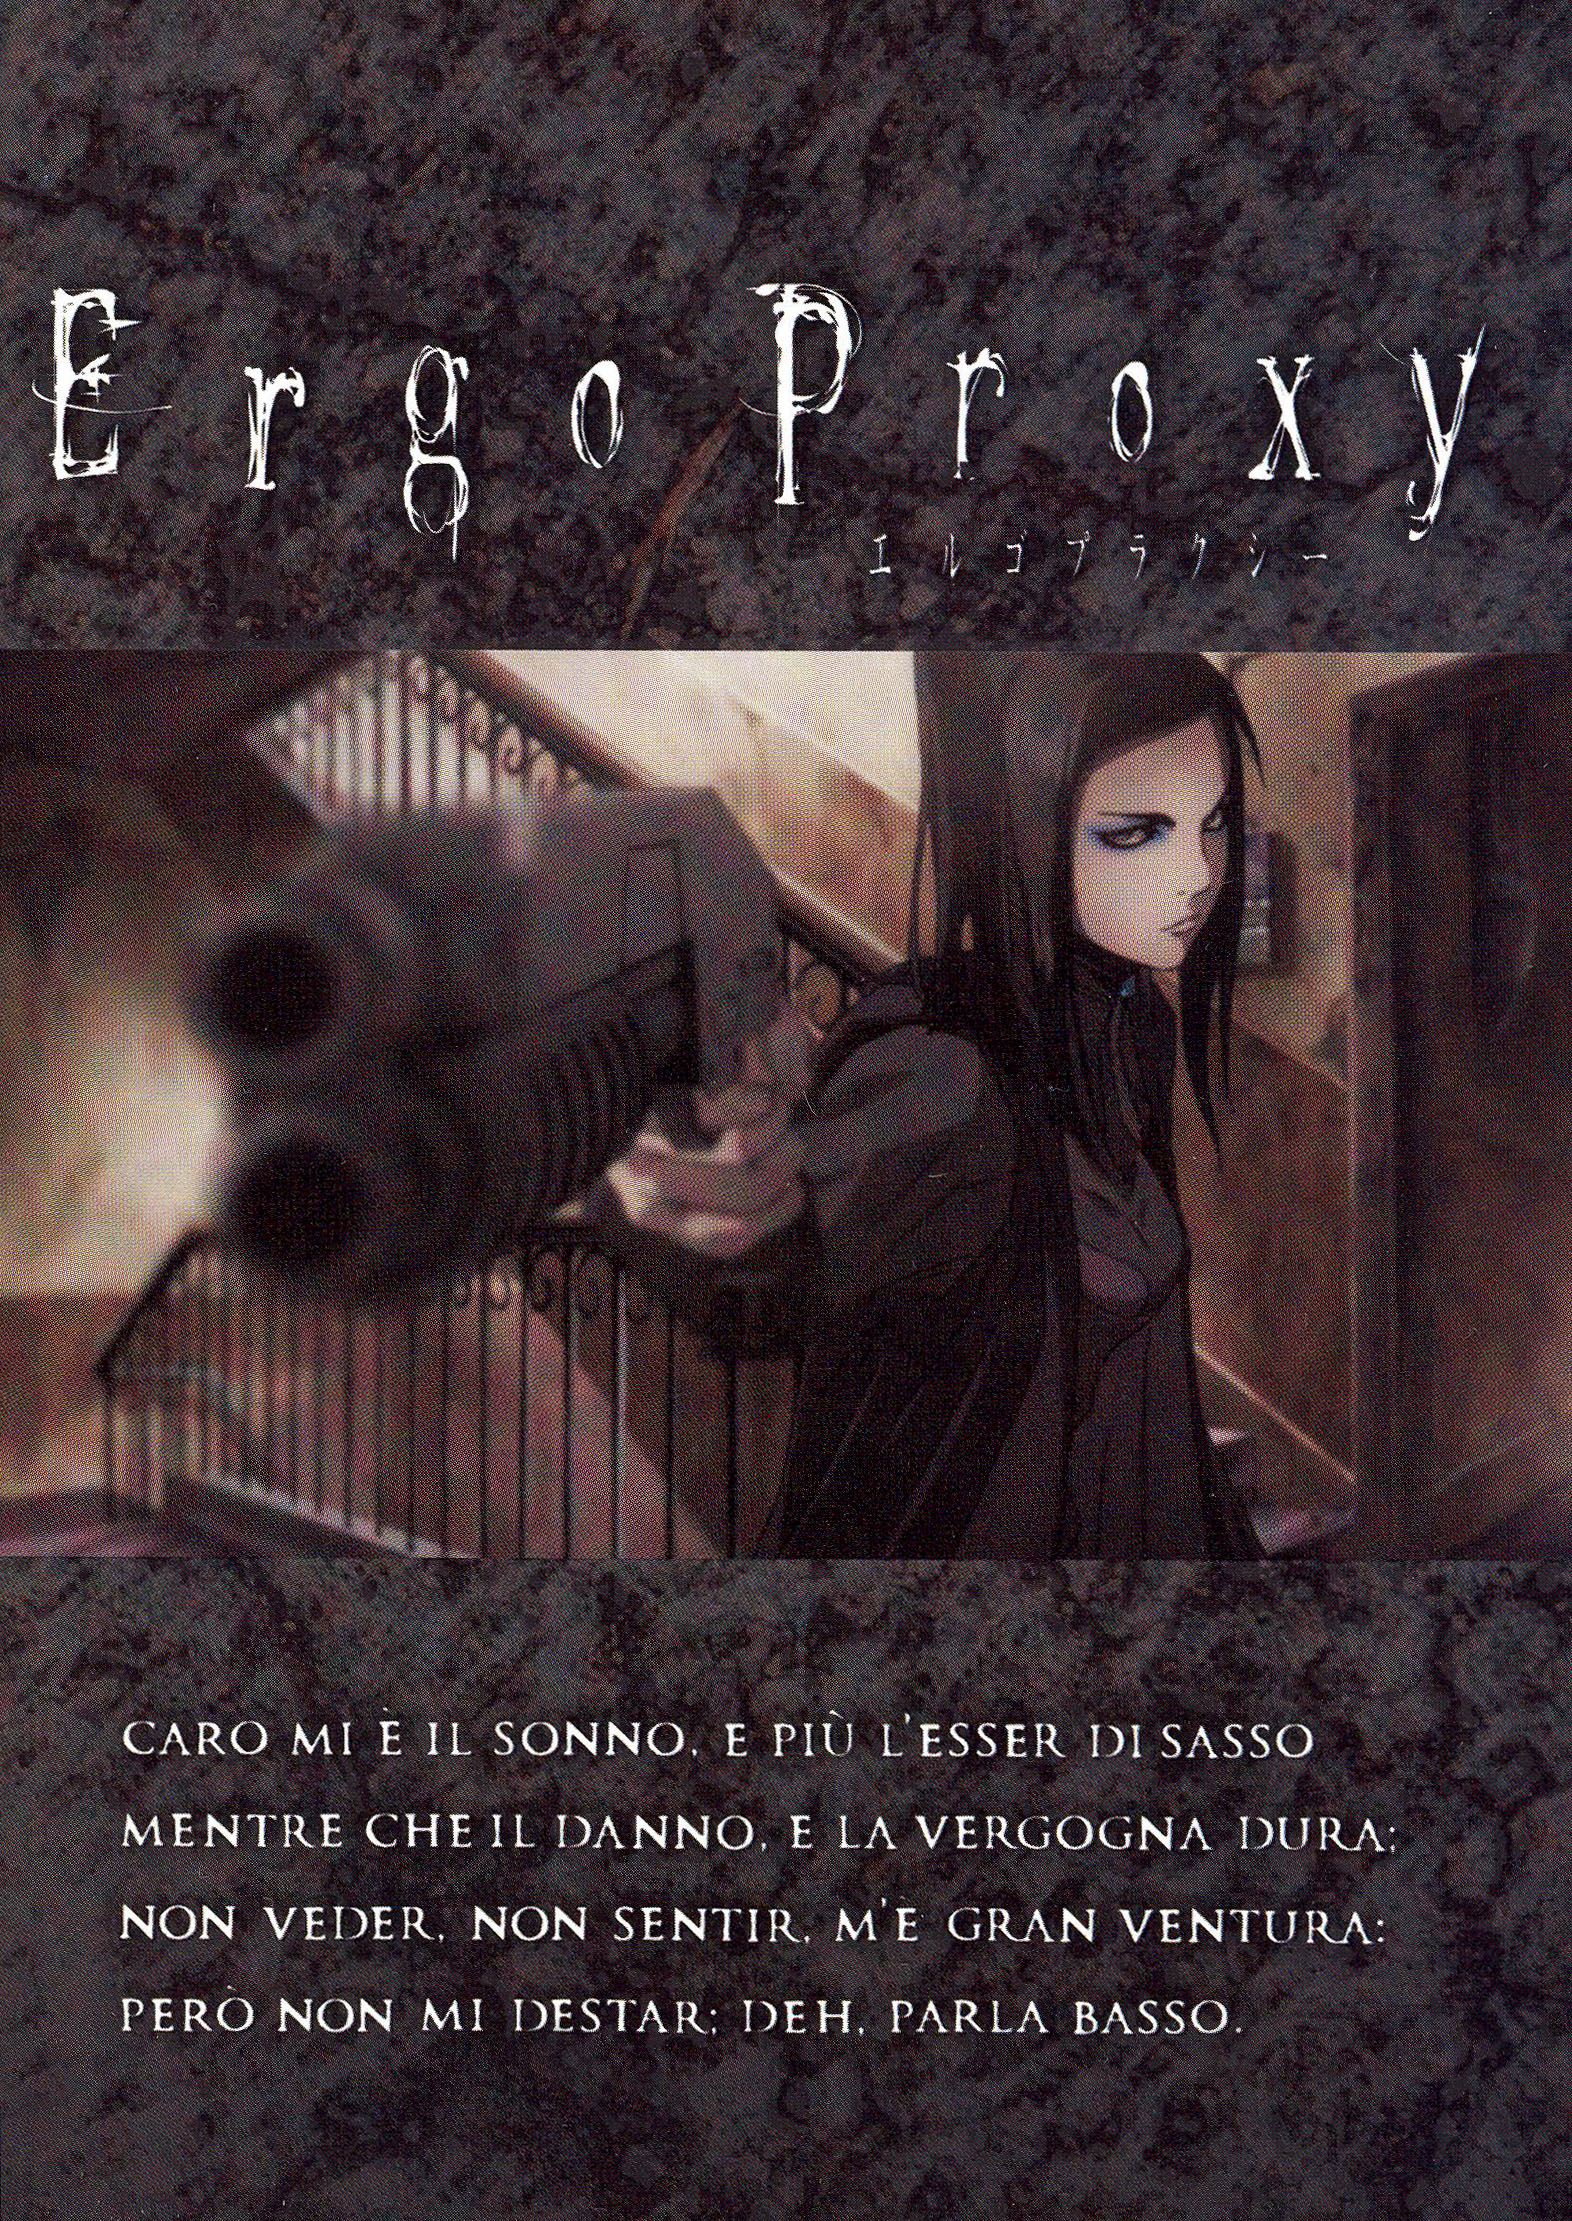 Ergo Proxy (English Dub) Awakening - Watch on Crunchyroll